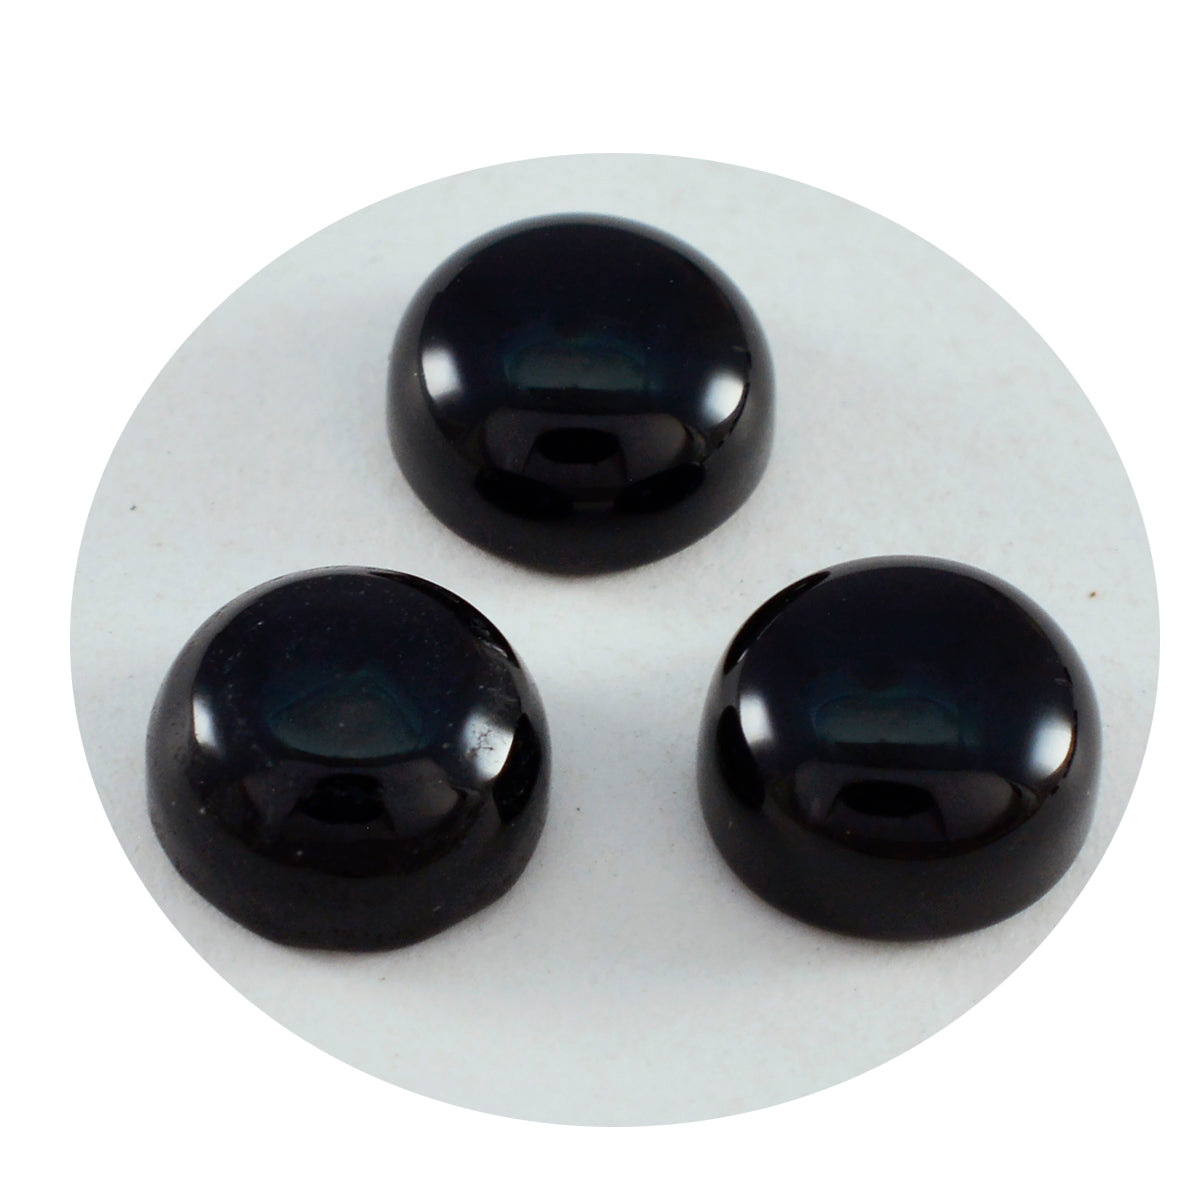 riyogems 1шт черный оникс кабошон 9х9 мм круглая форма красивый качественный камень